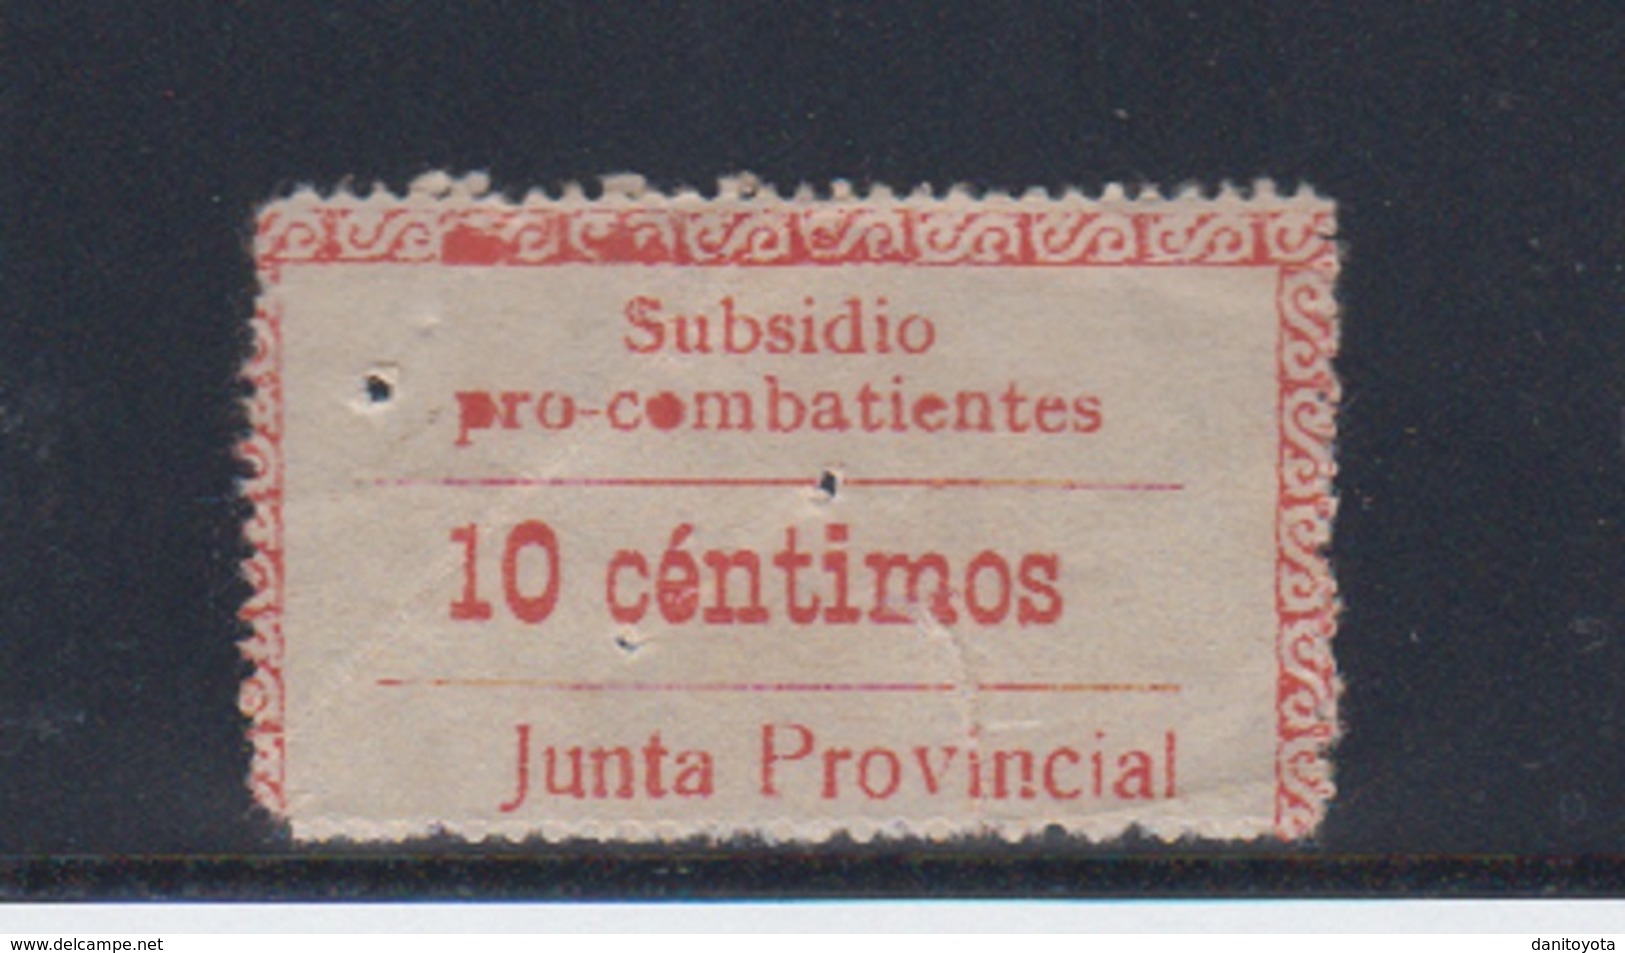 GUIPUZCOA.  EDIFIL 24 * SUBSIDIO PRO COMBATIENTES - Emisiones Nacionalistas